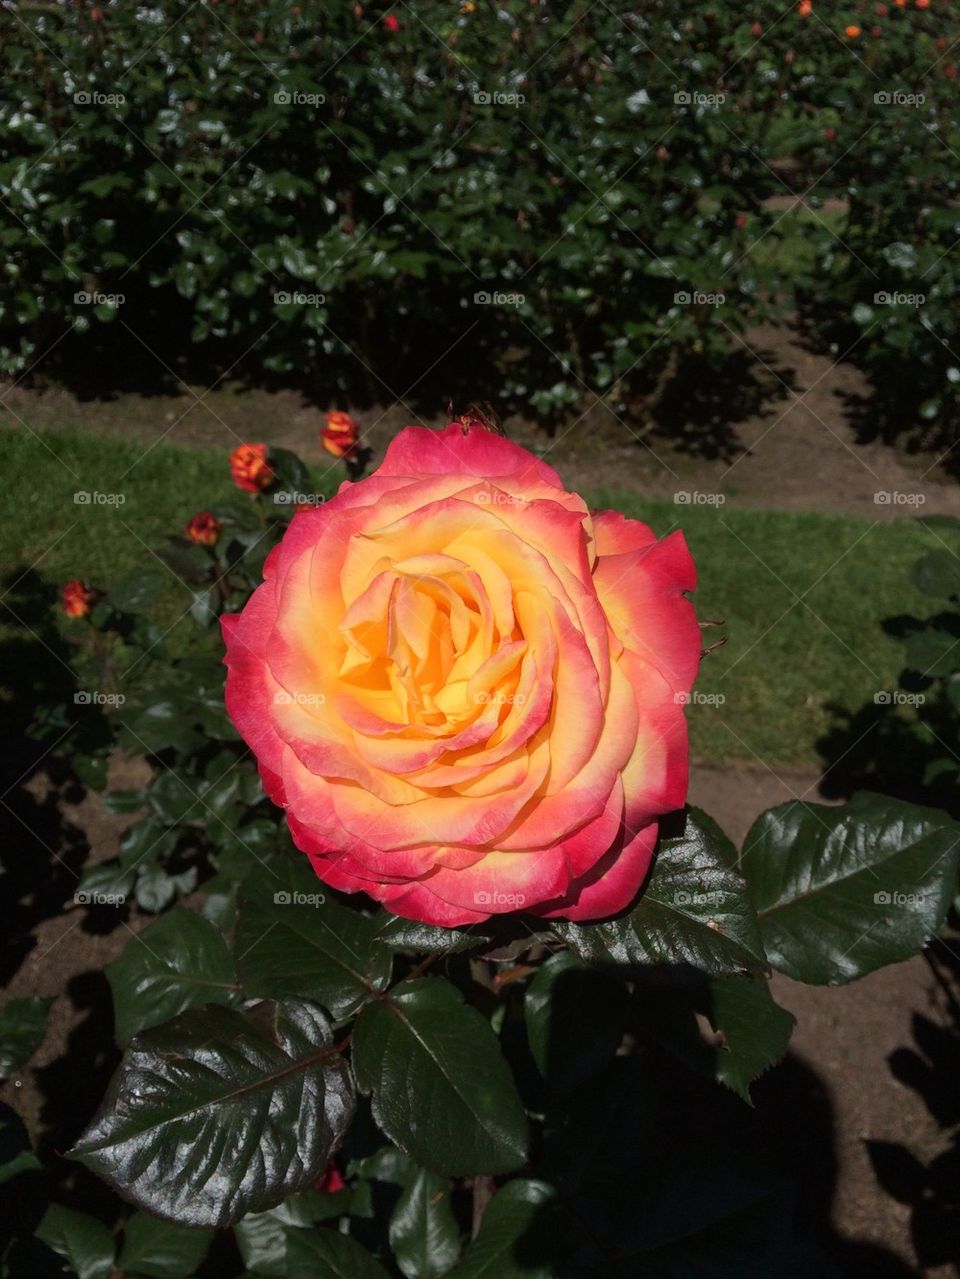 Portland rose garden